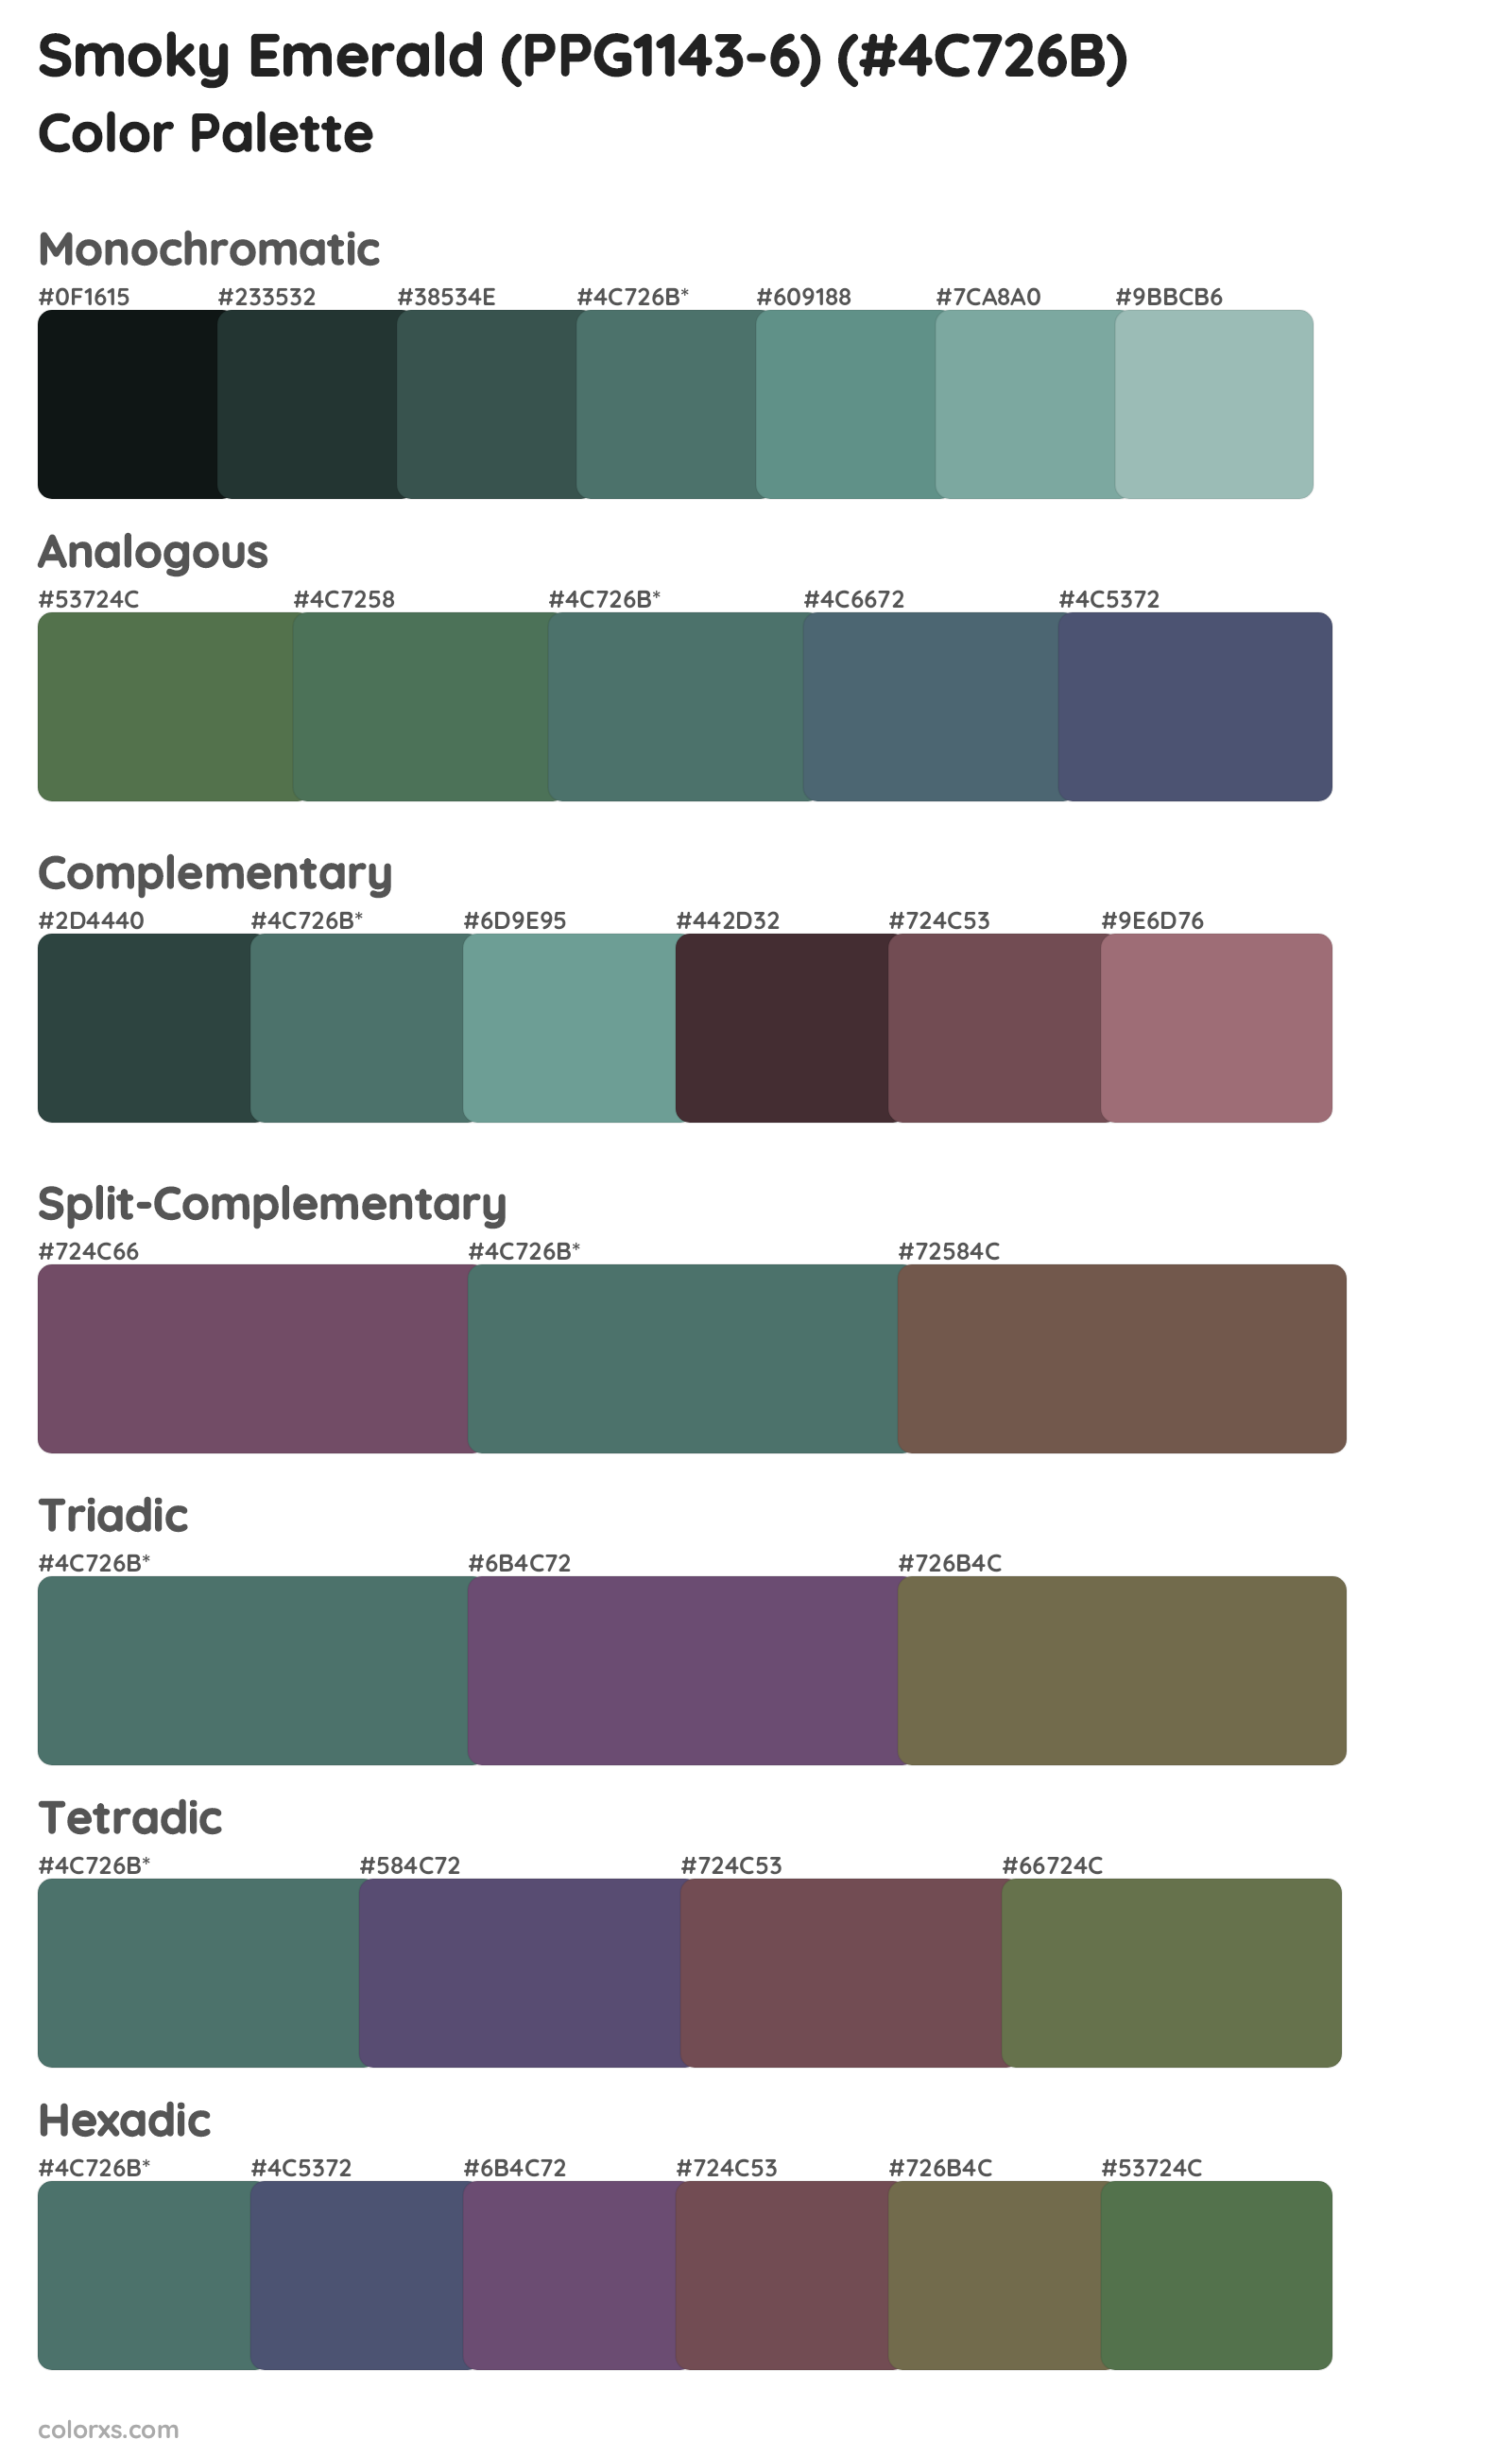 Smoky Emerald (PPG1143-6) Color Scheme Palettes